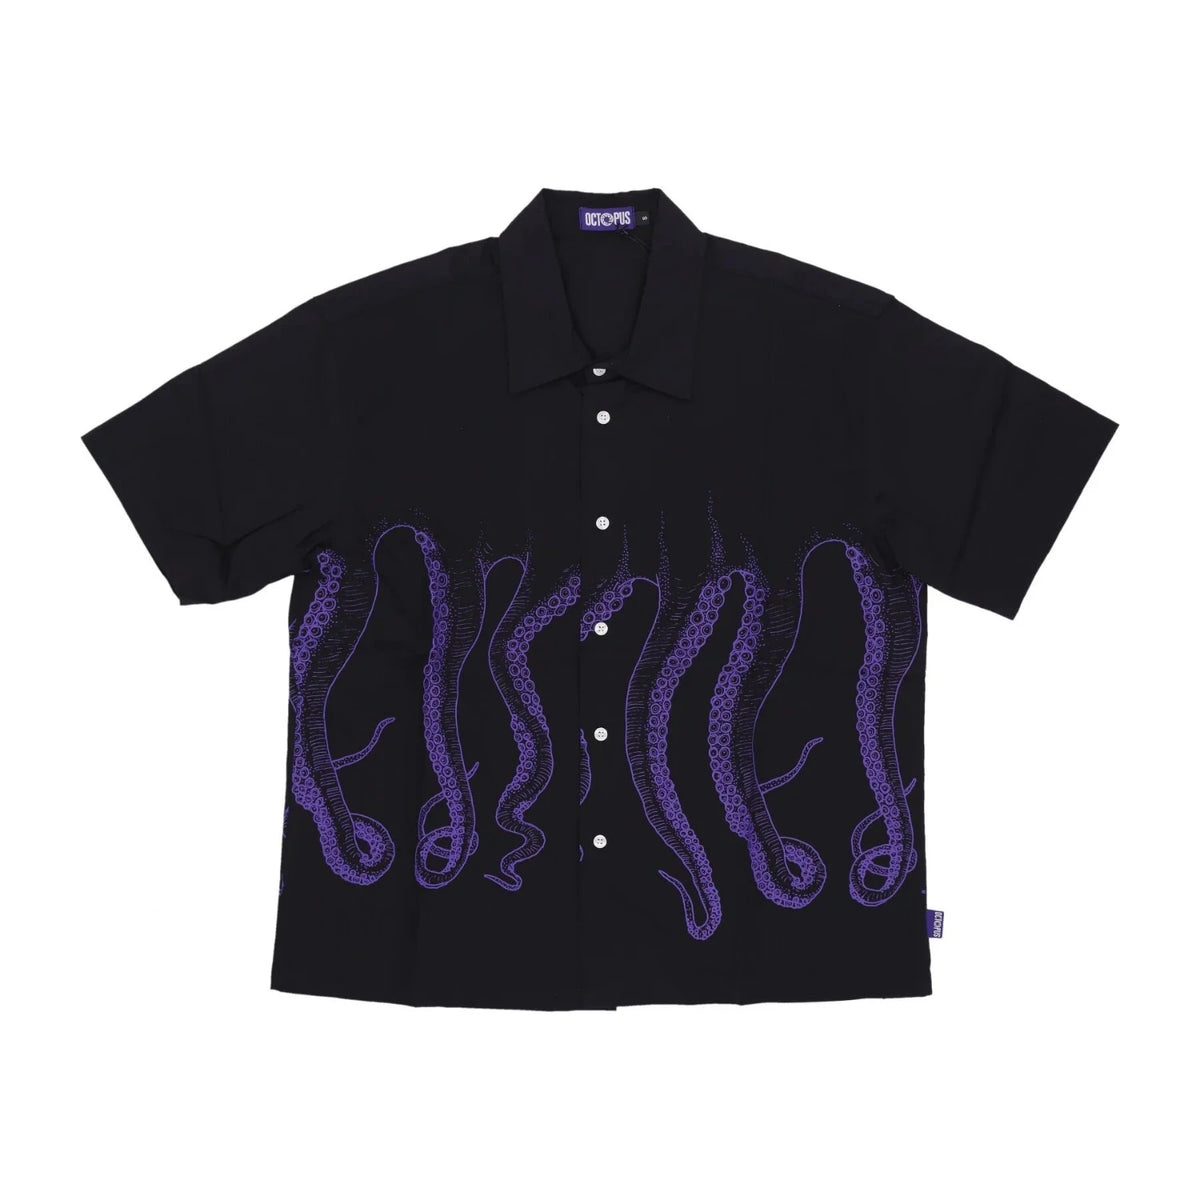 Octopus Men's Shirt Outline Black